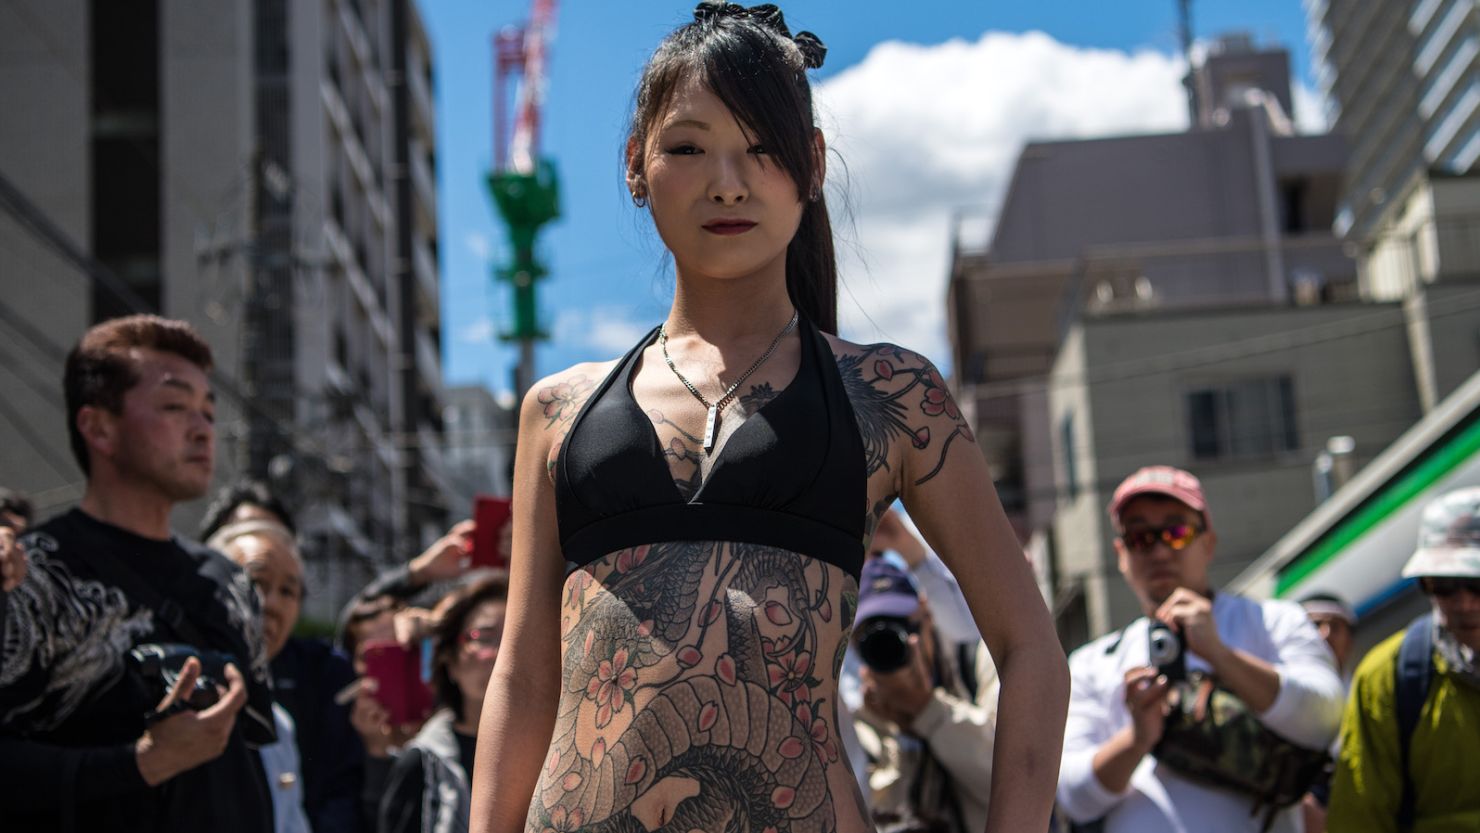 Japan has tricky policies on skin art.